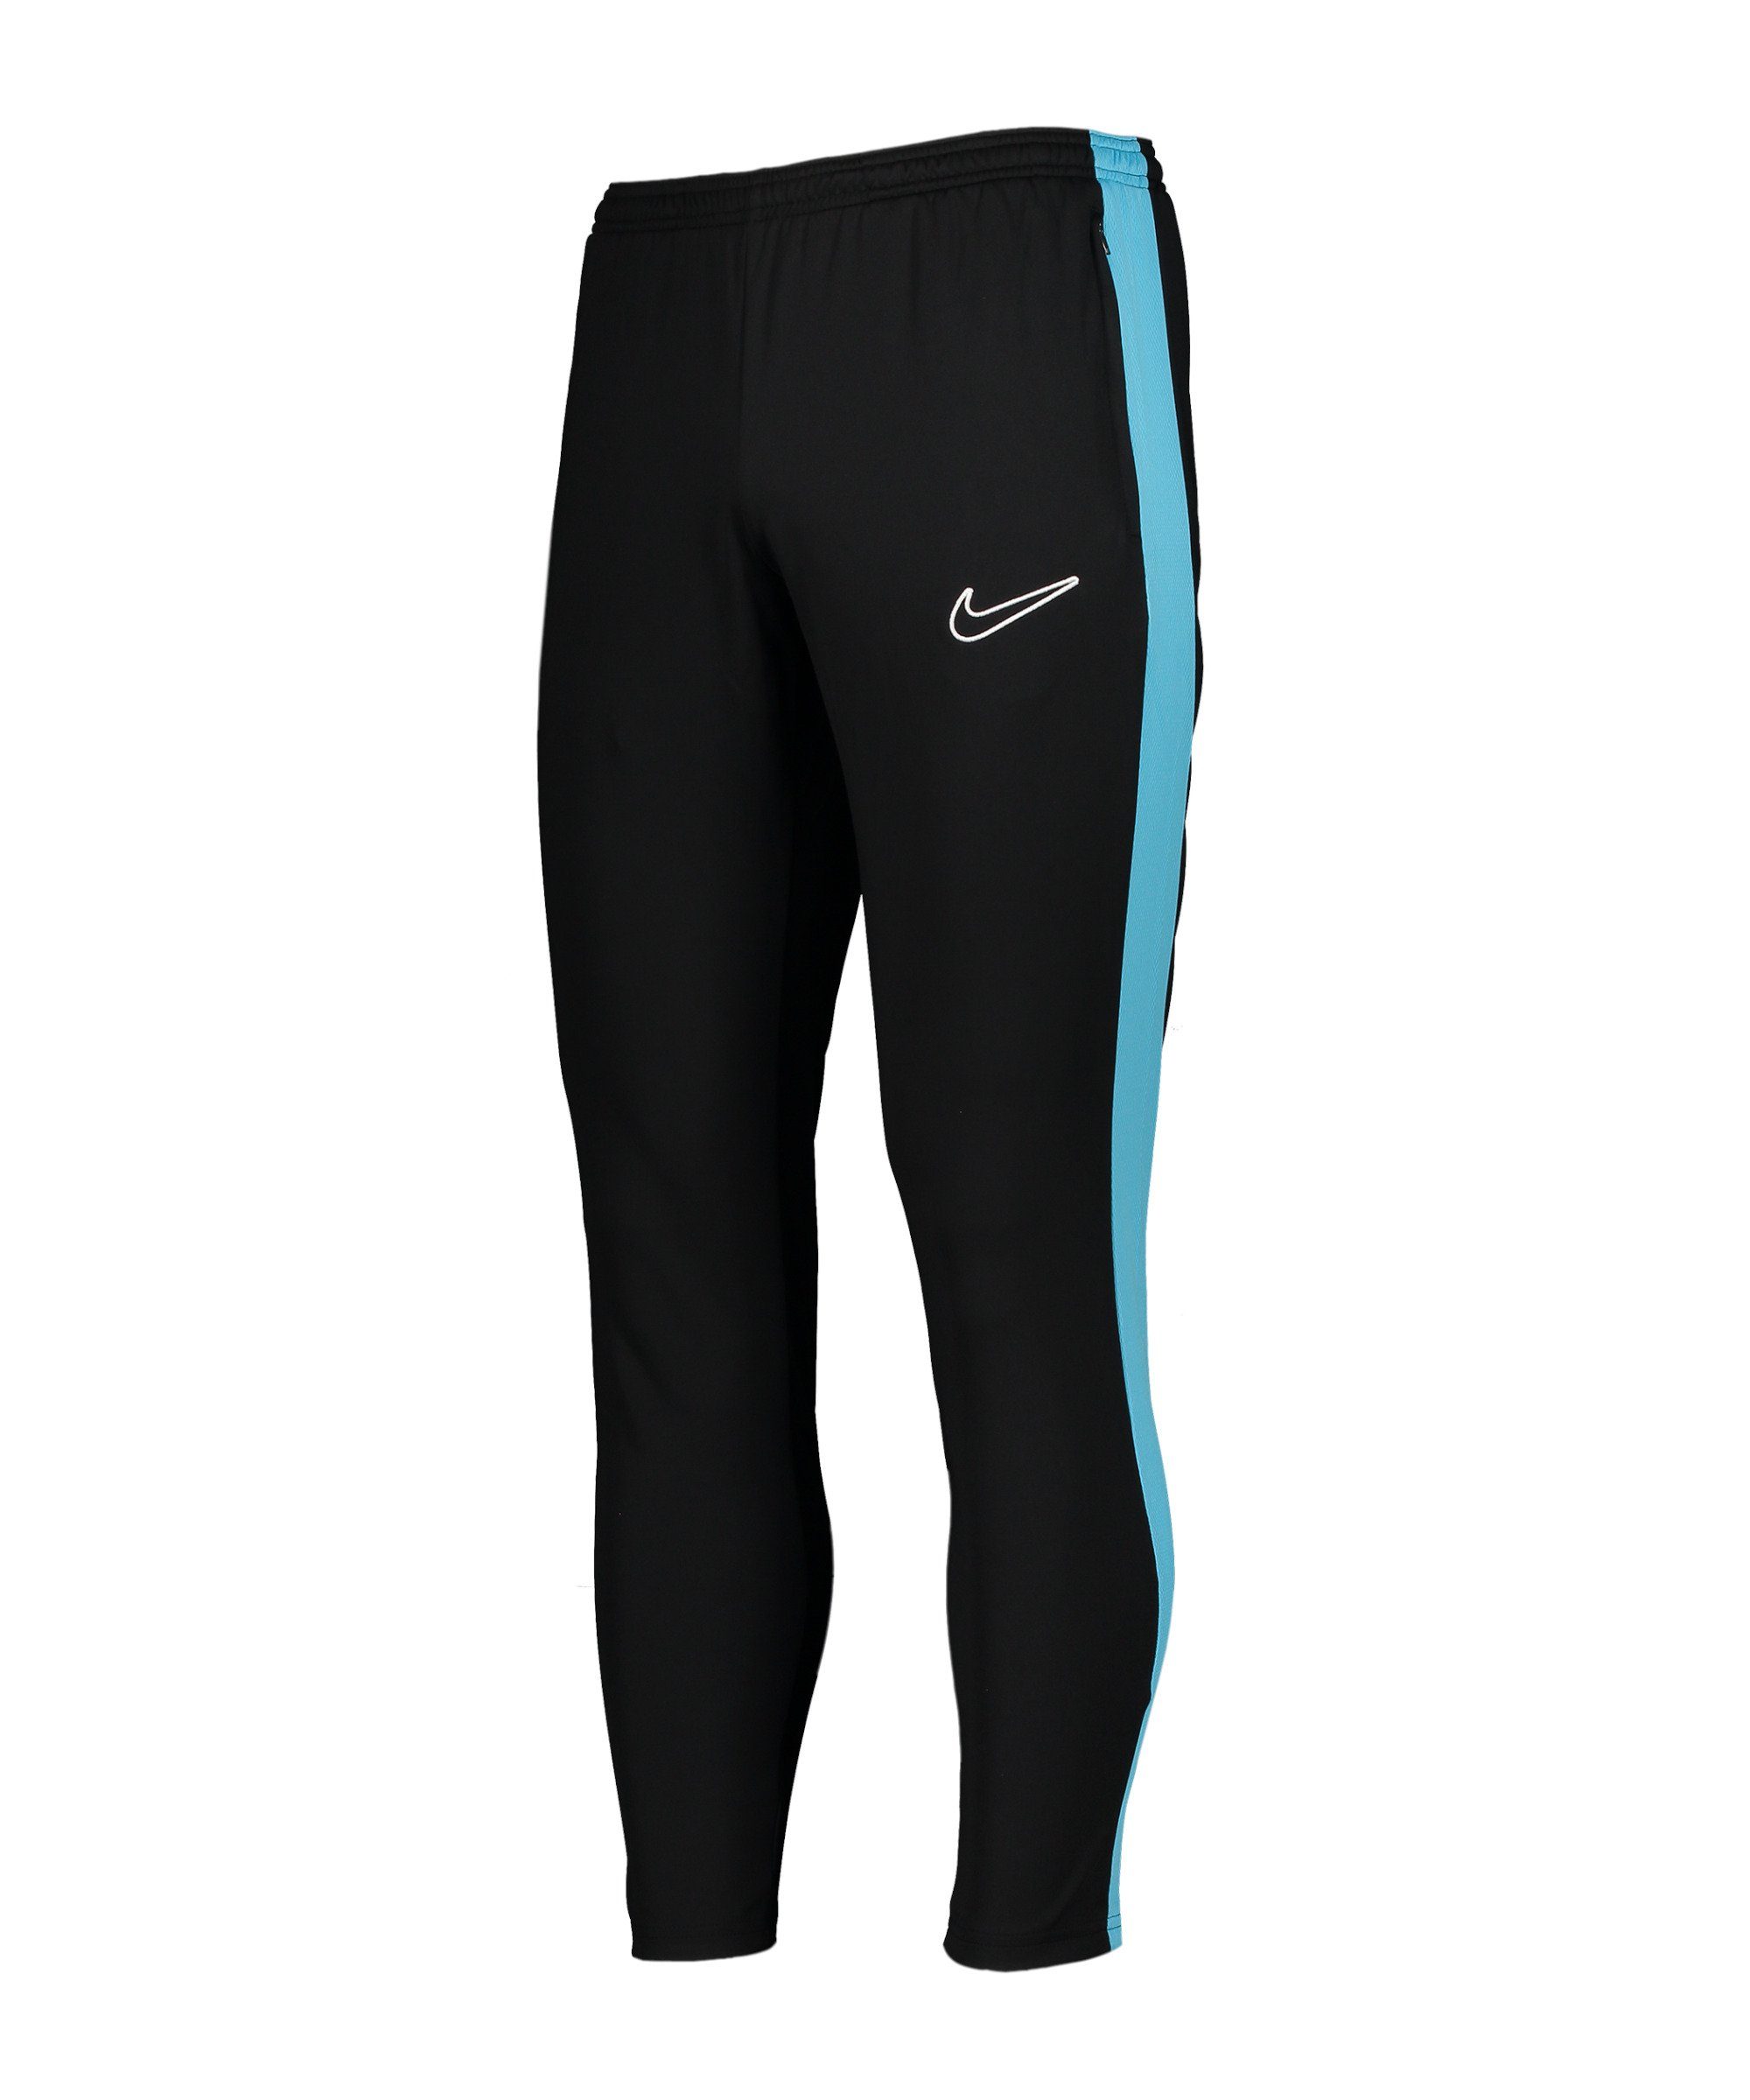 Trainingshose Sporthose schwarzschwarzblau Academy Nike